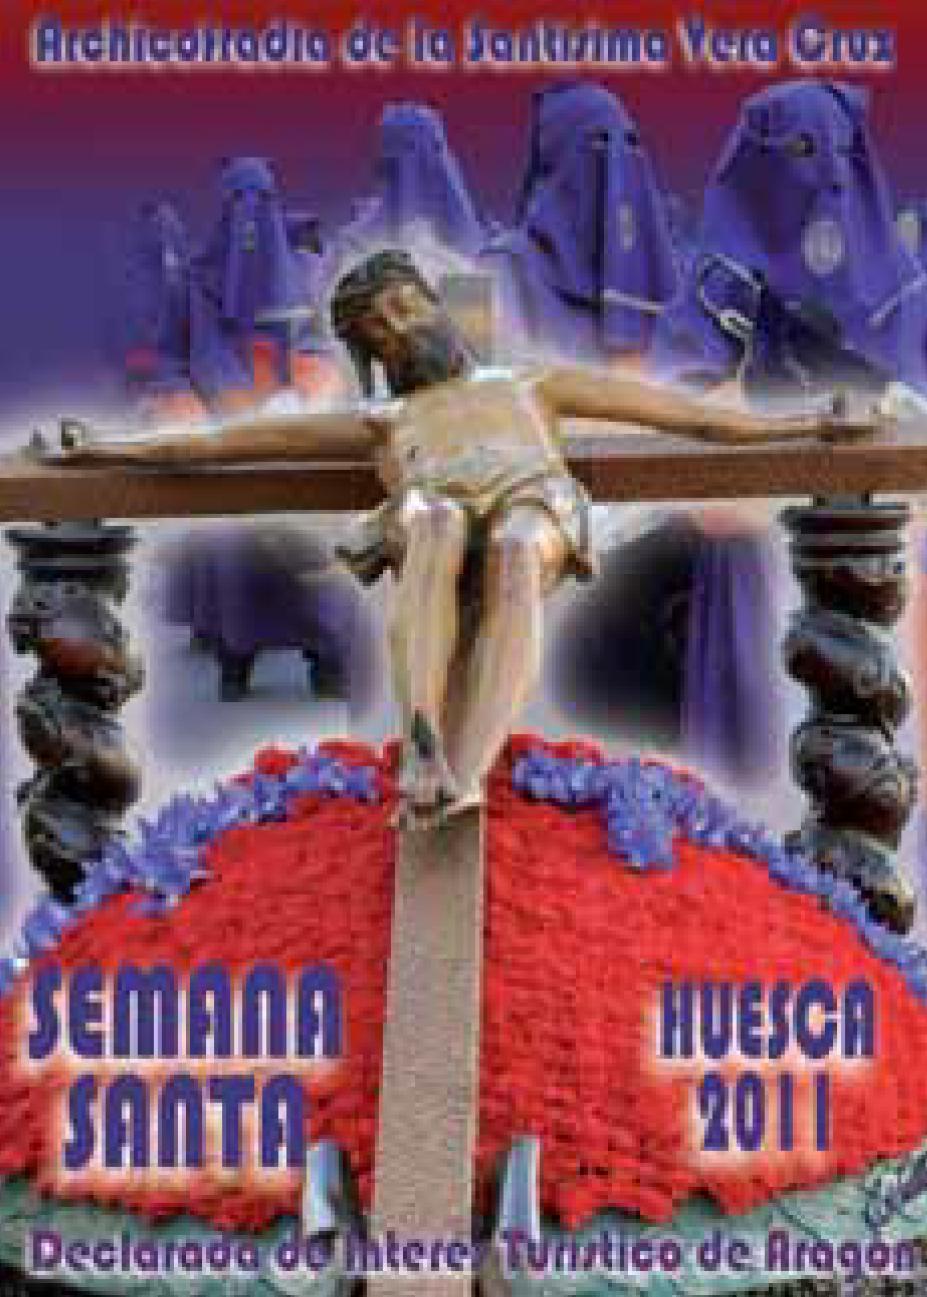 Semana Santa de Huesca 2011